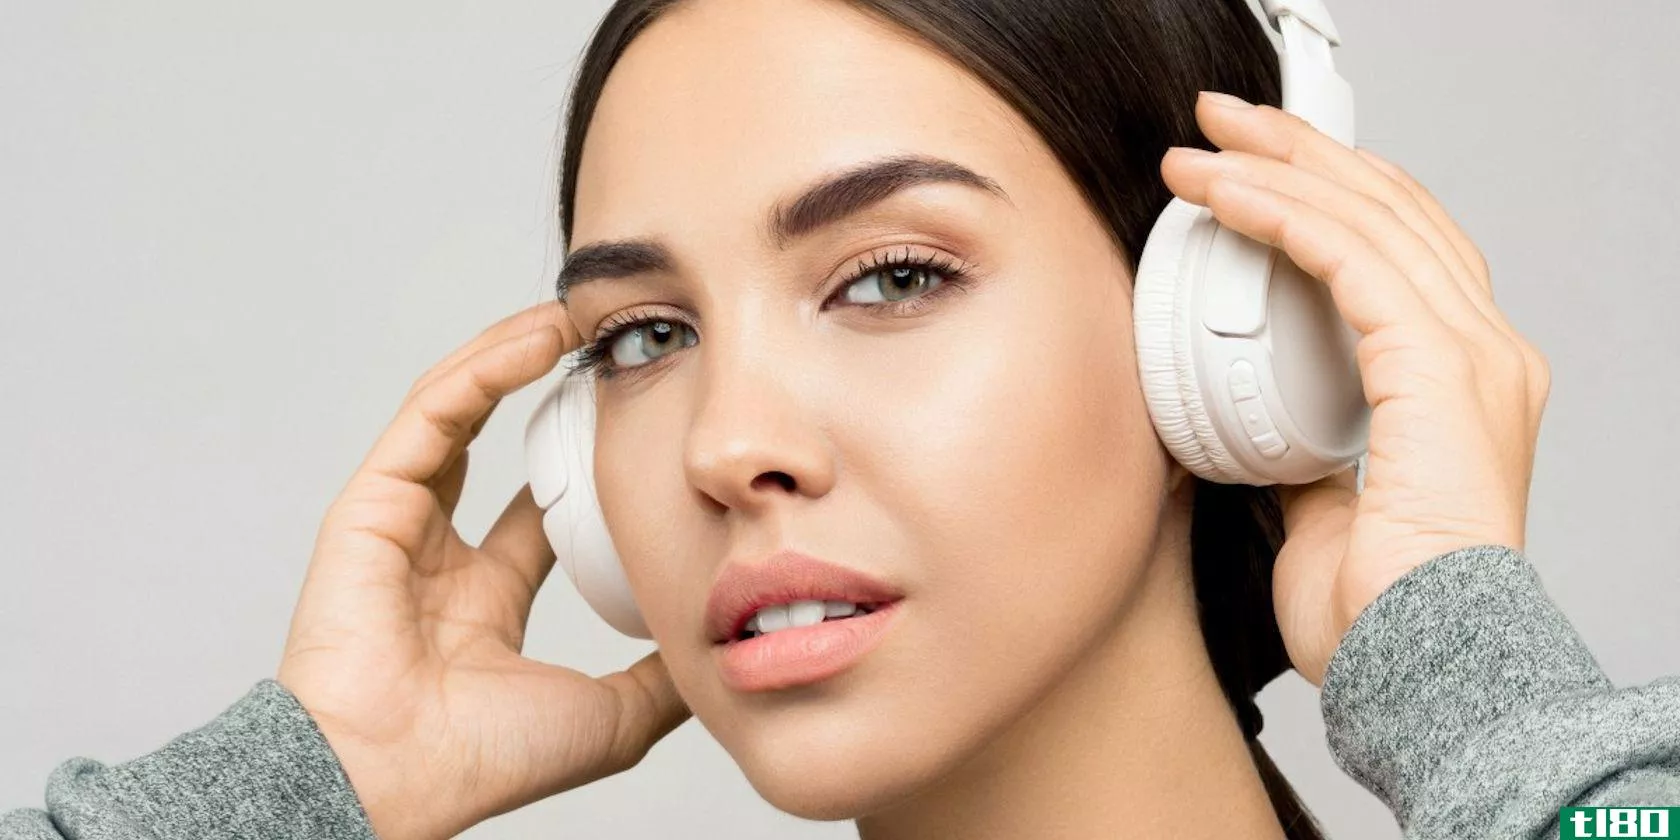 Woman Wearing White Headphones